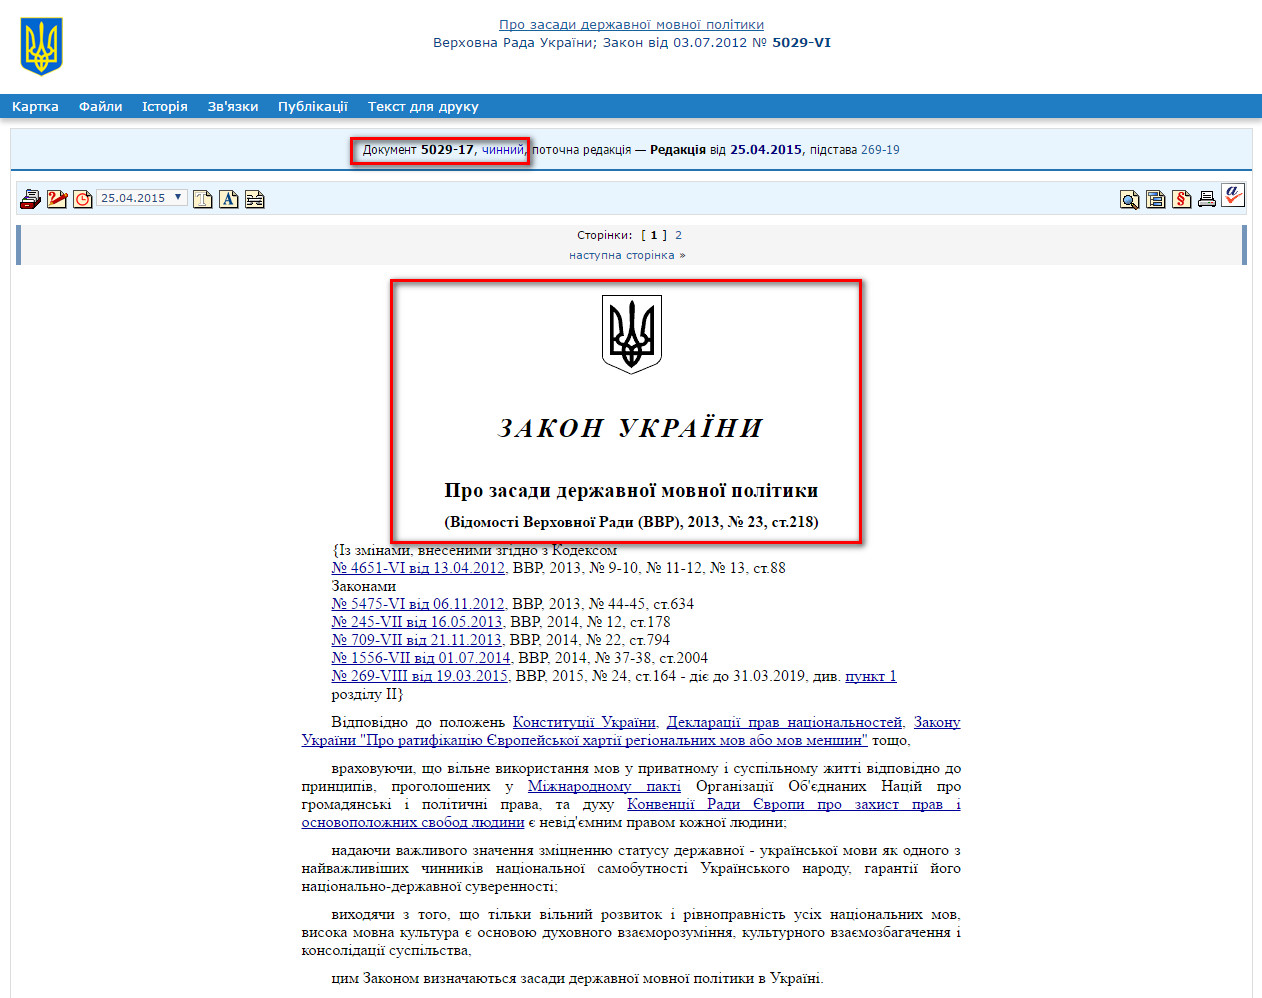 http://zakon1.rada.gov.ua/laws/show/5029-17/page